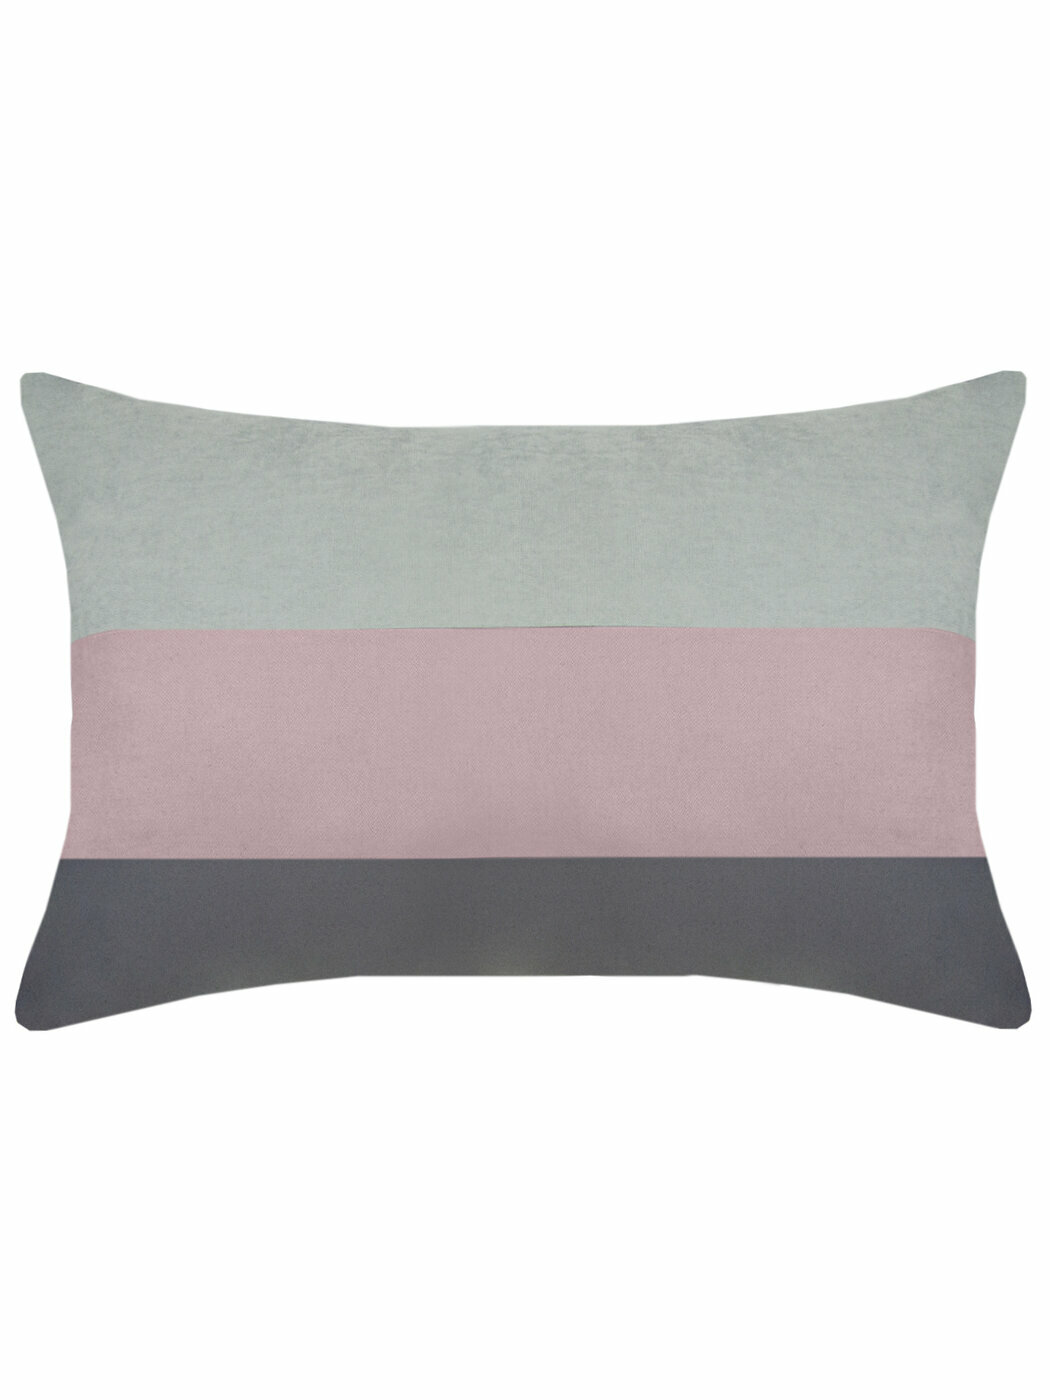 Наволочка - чехол для декоративной подушки на молнии "Карина I" 45 х 65 см, розовый, серый